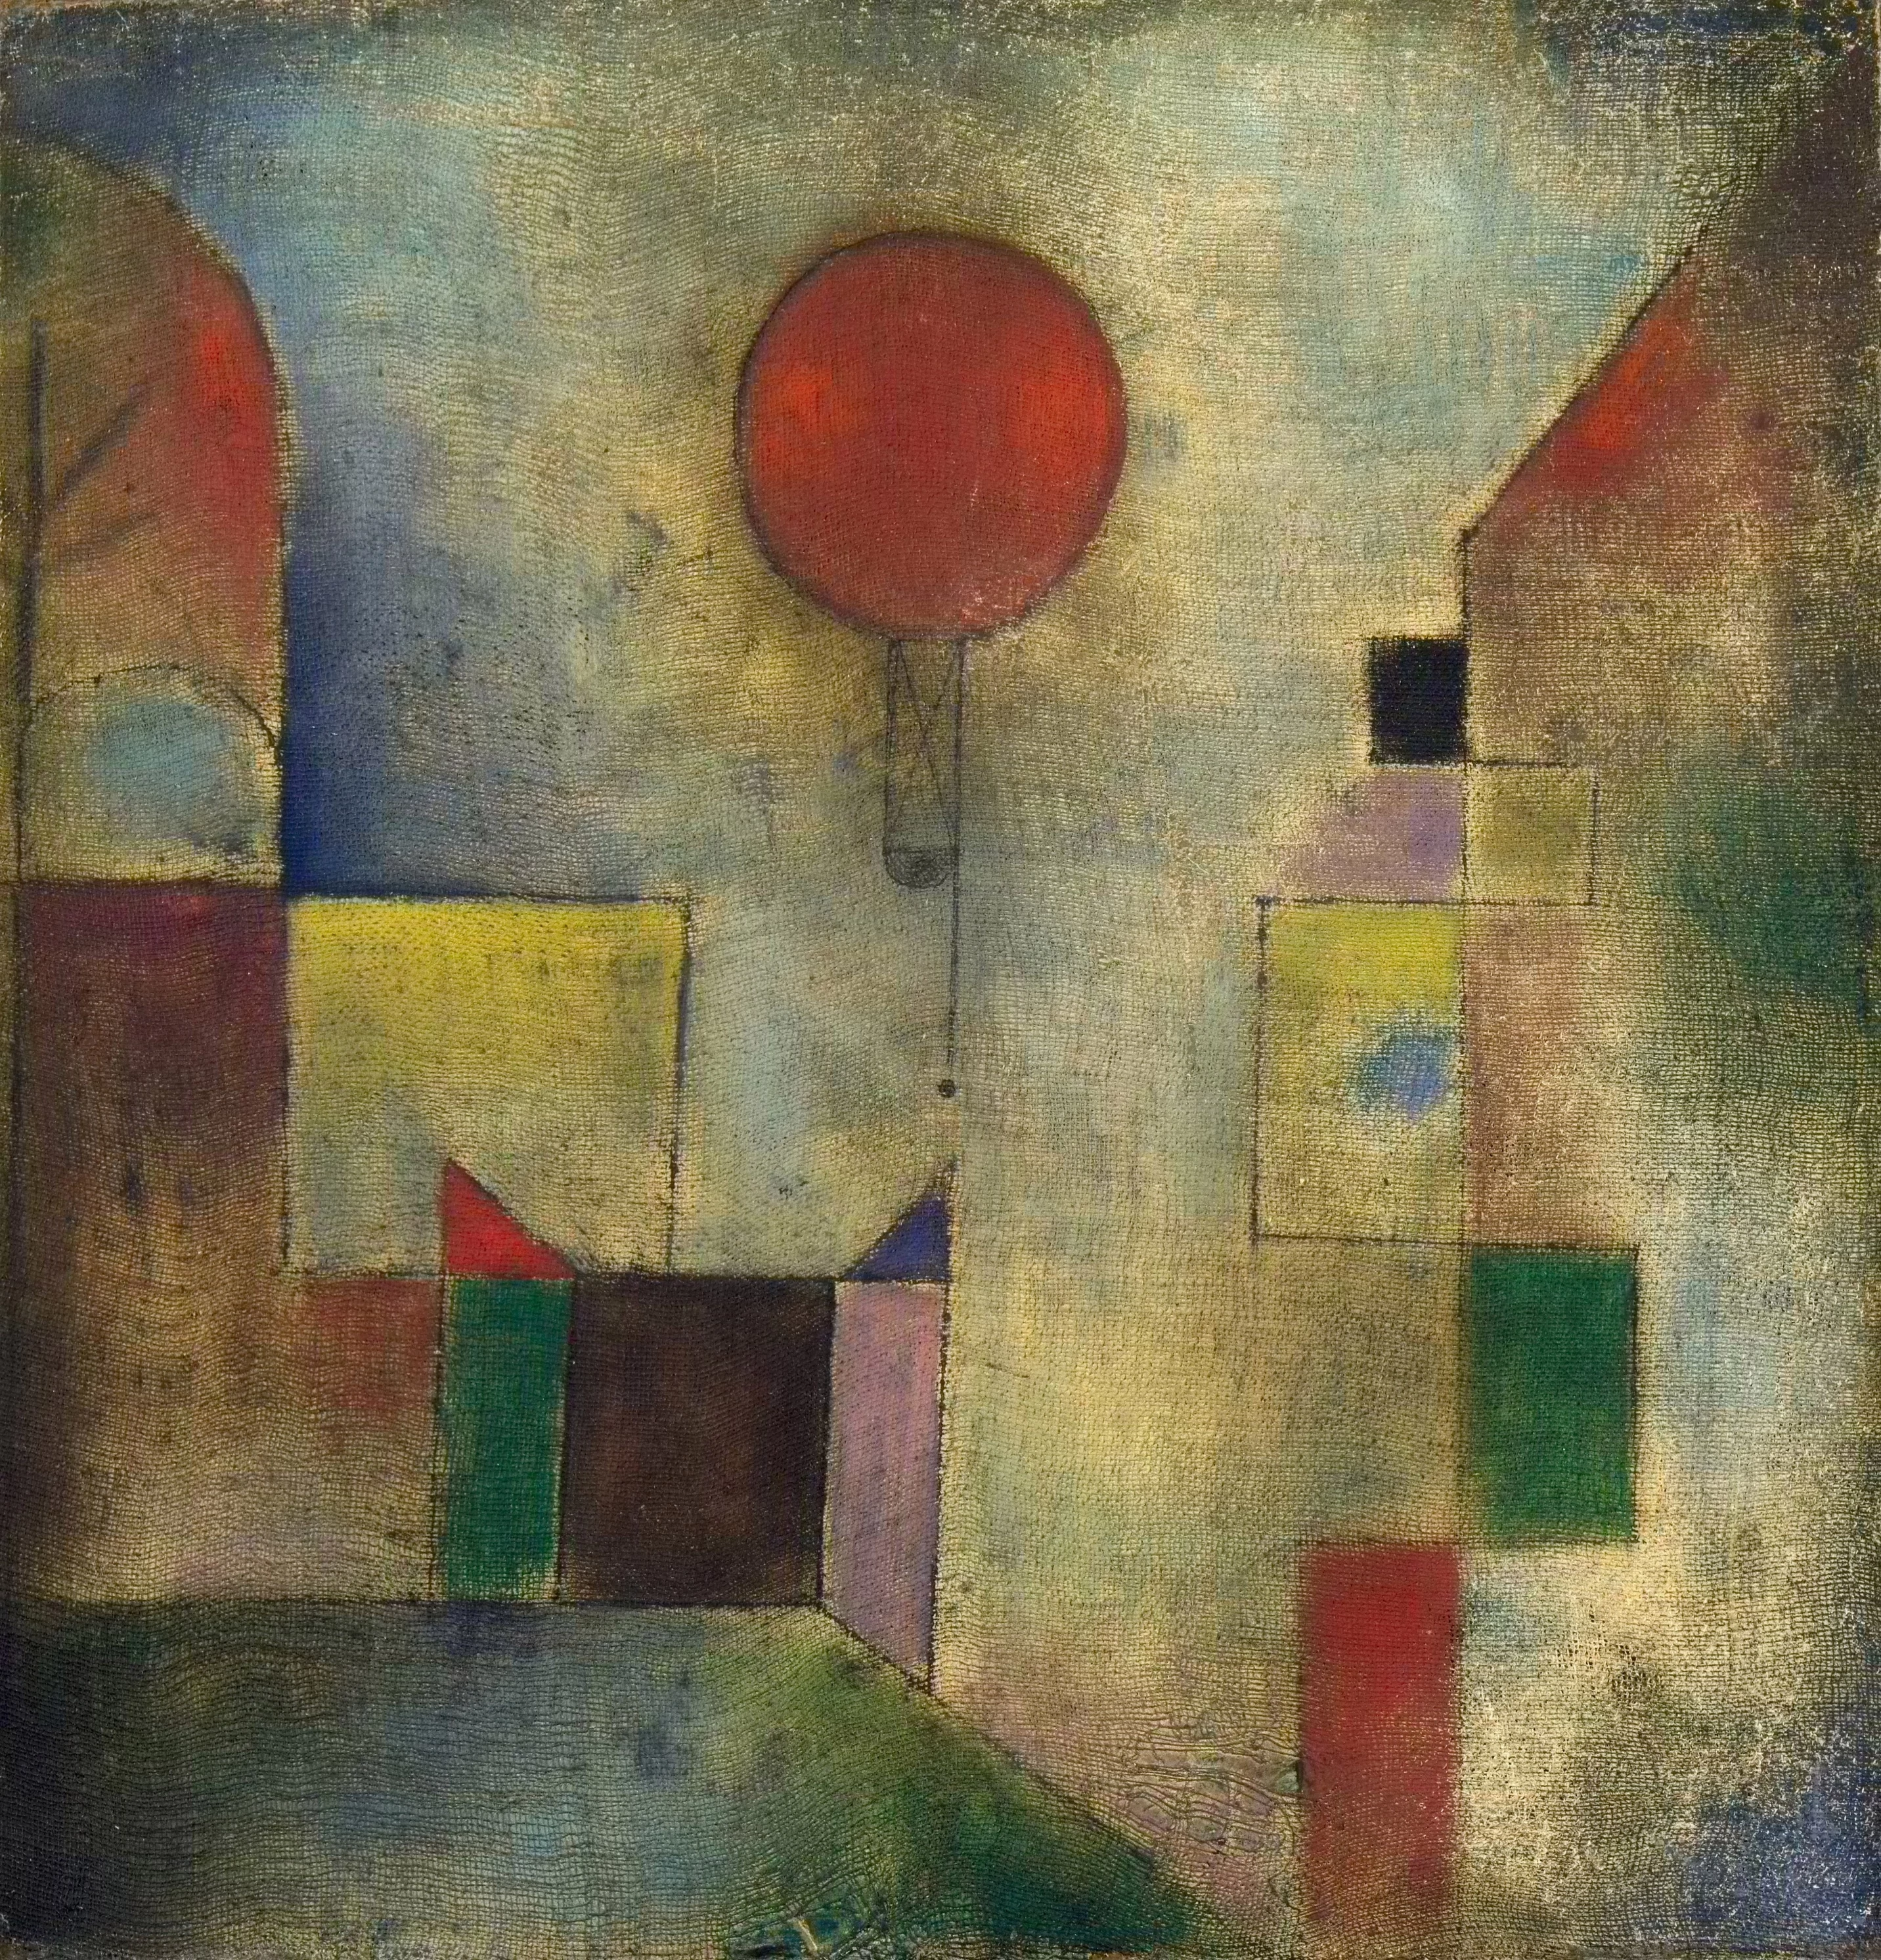 Red Balloon, Paul Klee